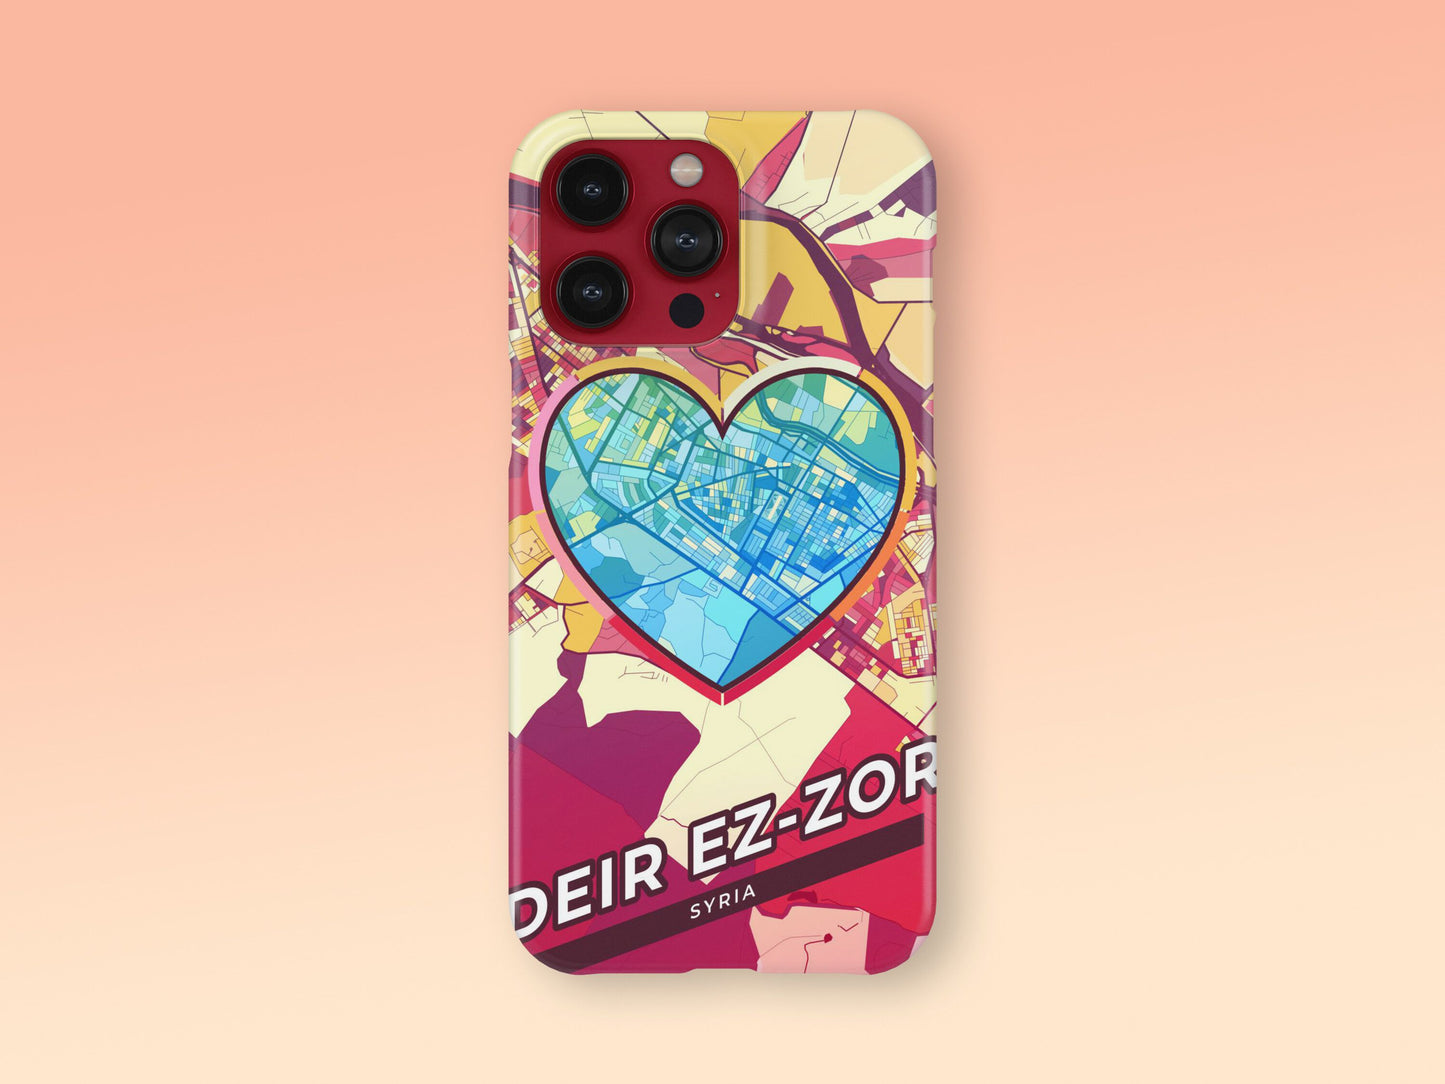 Deir Ez-Zor Syria slim phone case with colorful icon. Birthday, wedding or housewarming gift. Couple match cases. 2